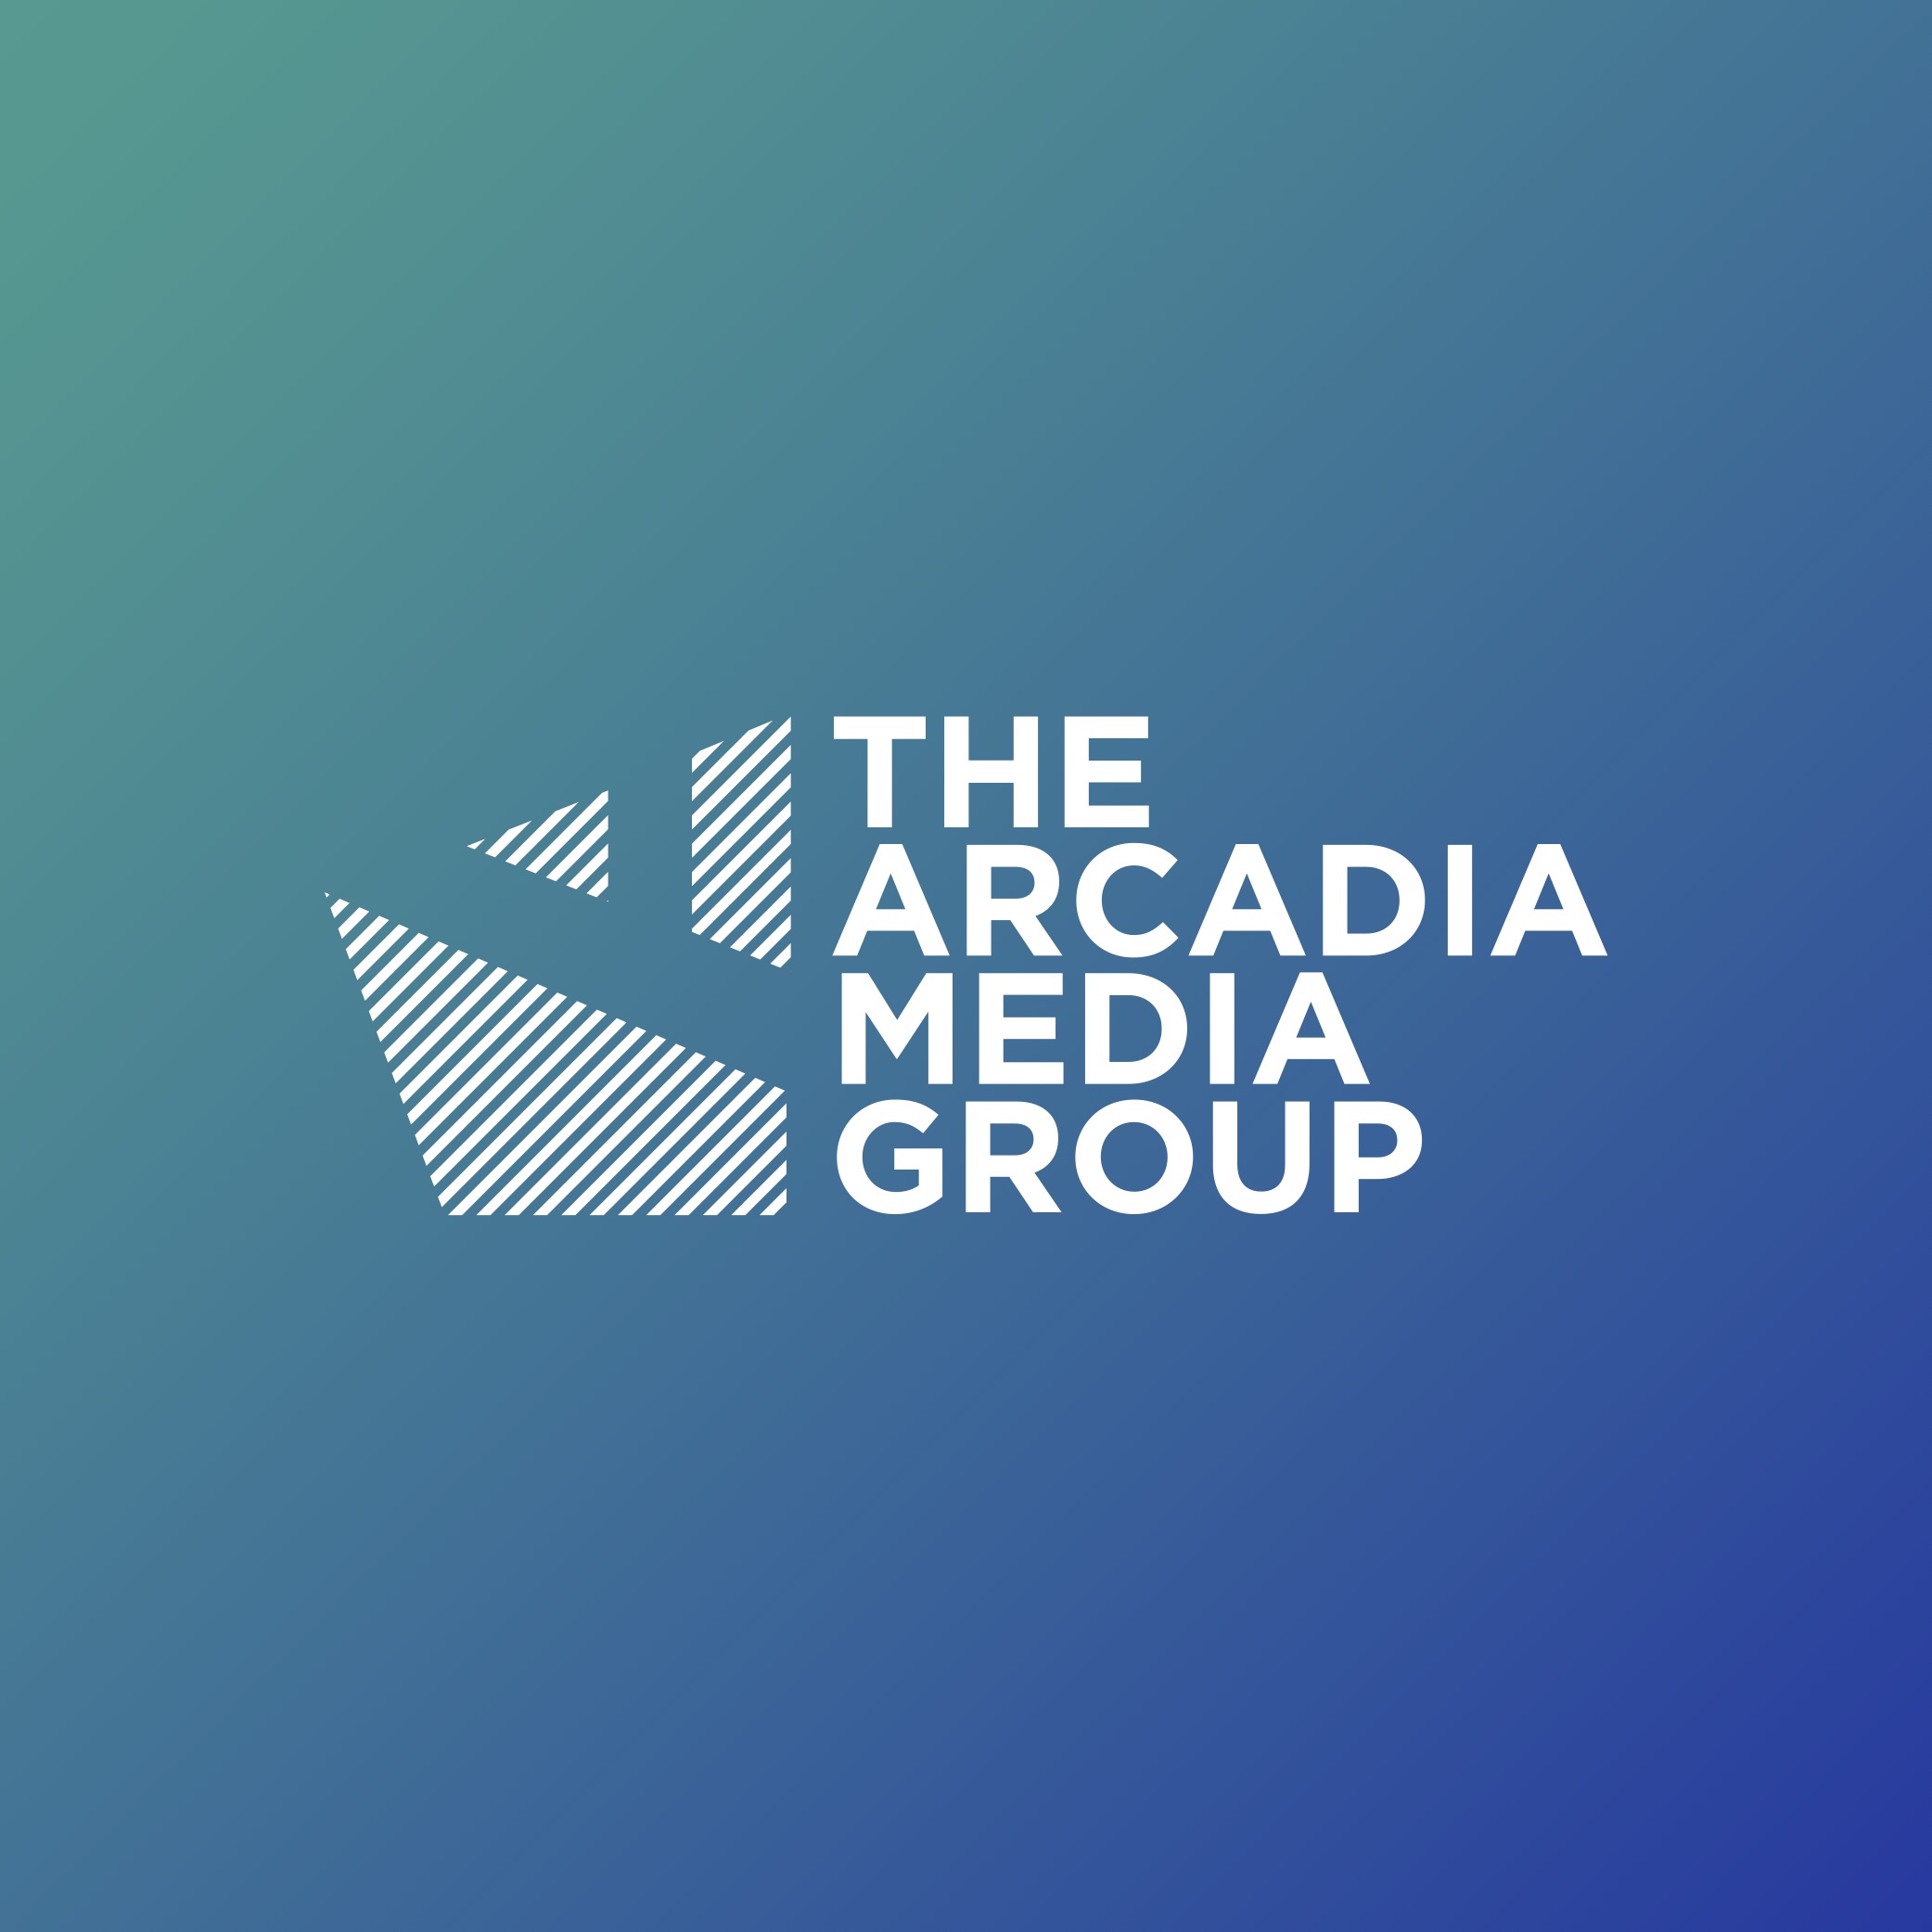 Arcadia Media Group